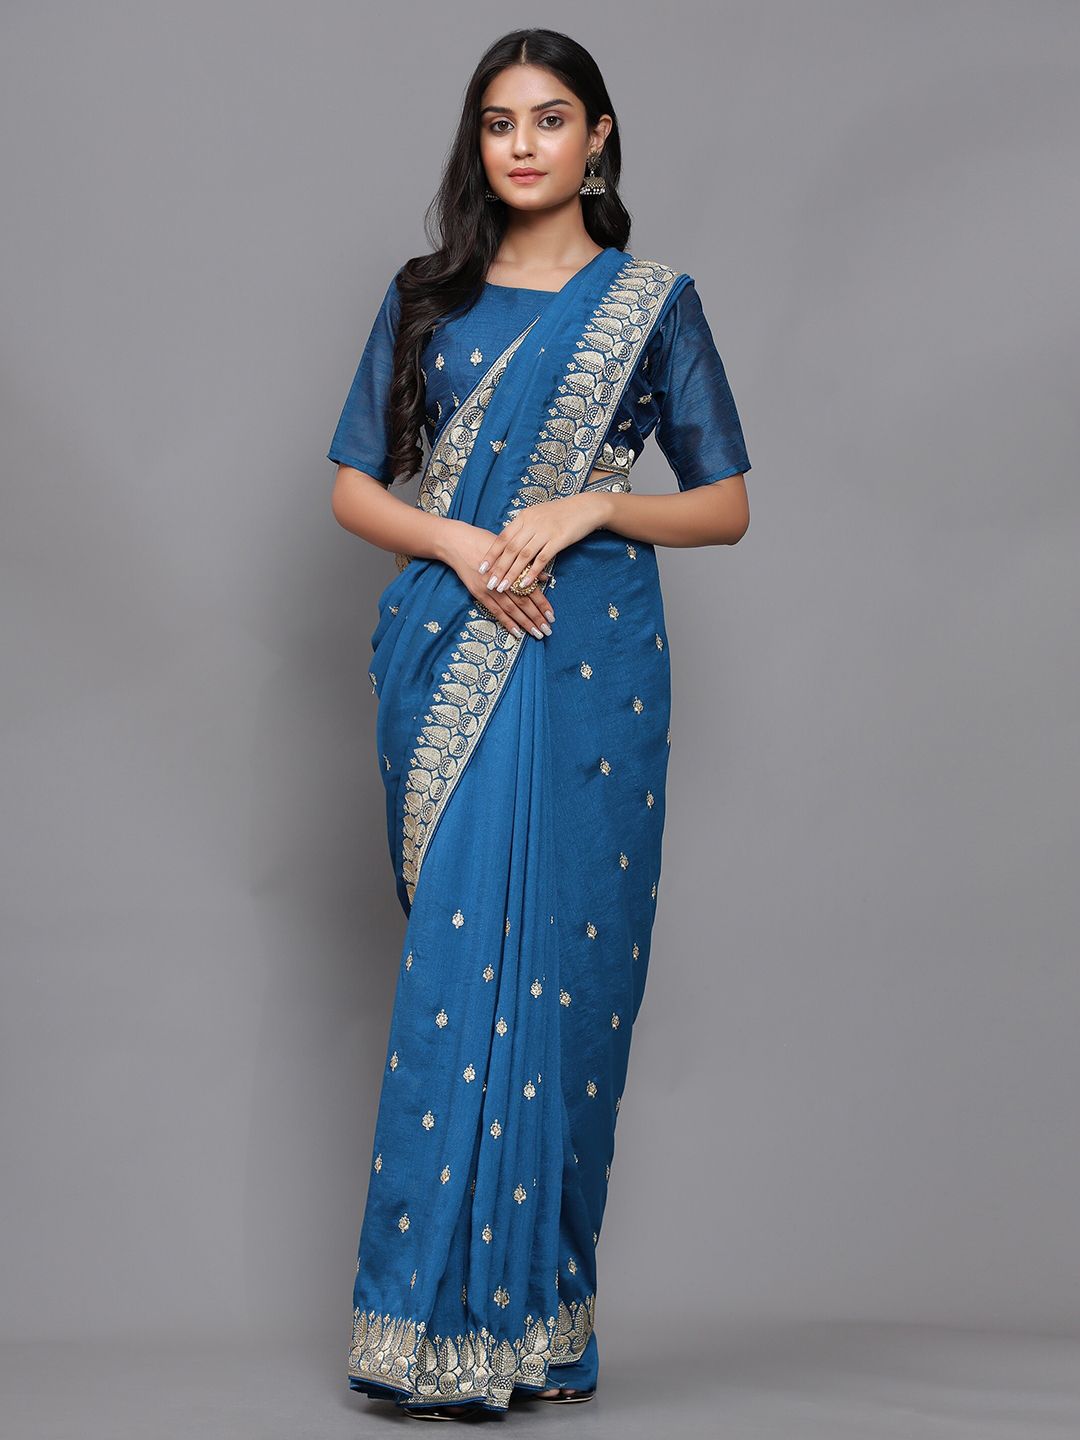 3BUDDY FASHION Turquoise Blue & Silver-Toned Embellished Sequinned Jute Silk Venkatgiri Saree Price in India